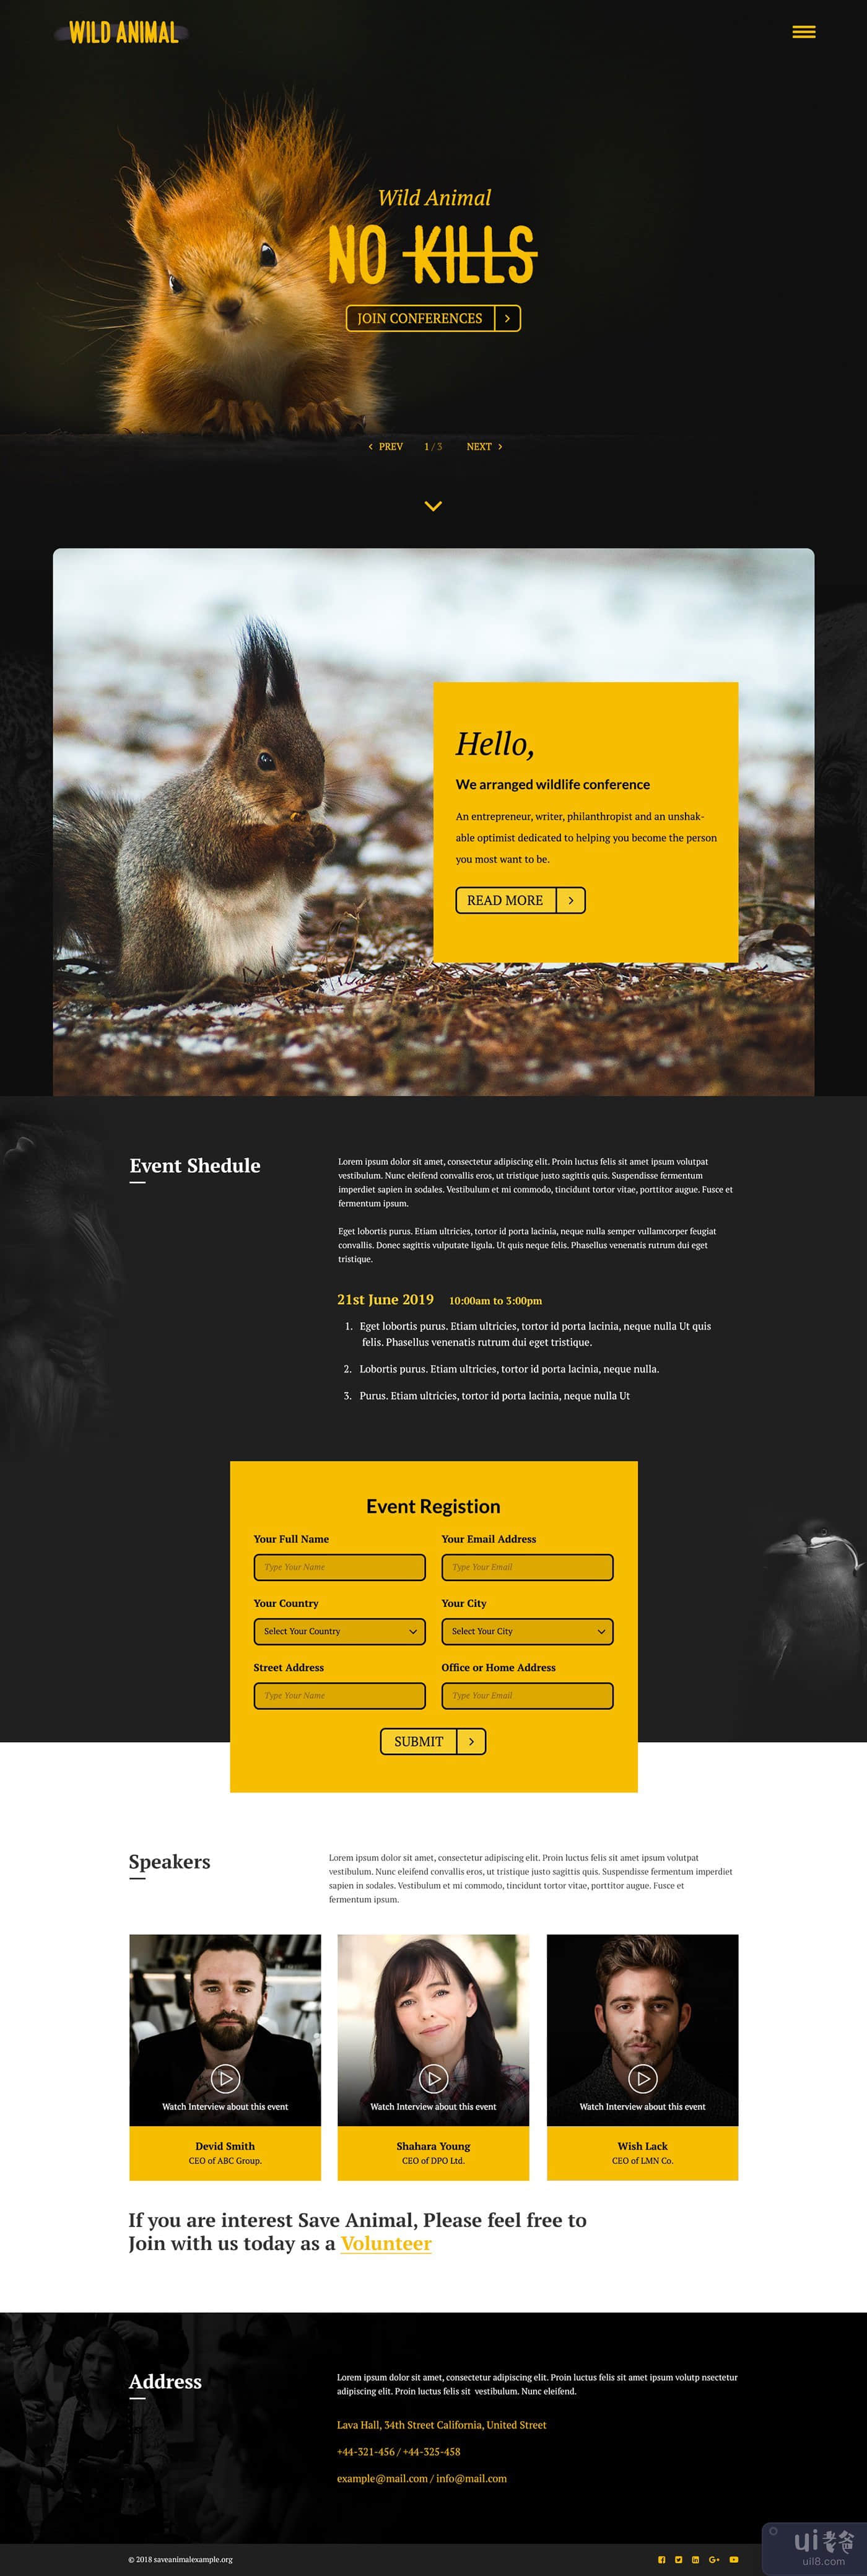 野生动物 - 免费登陆页面模板(Wild Animal - Free LandingPage Template)插图